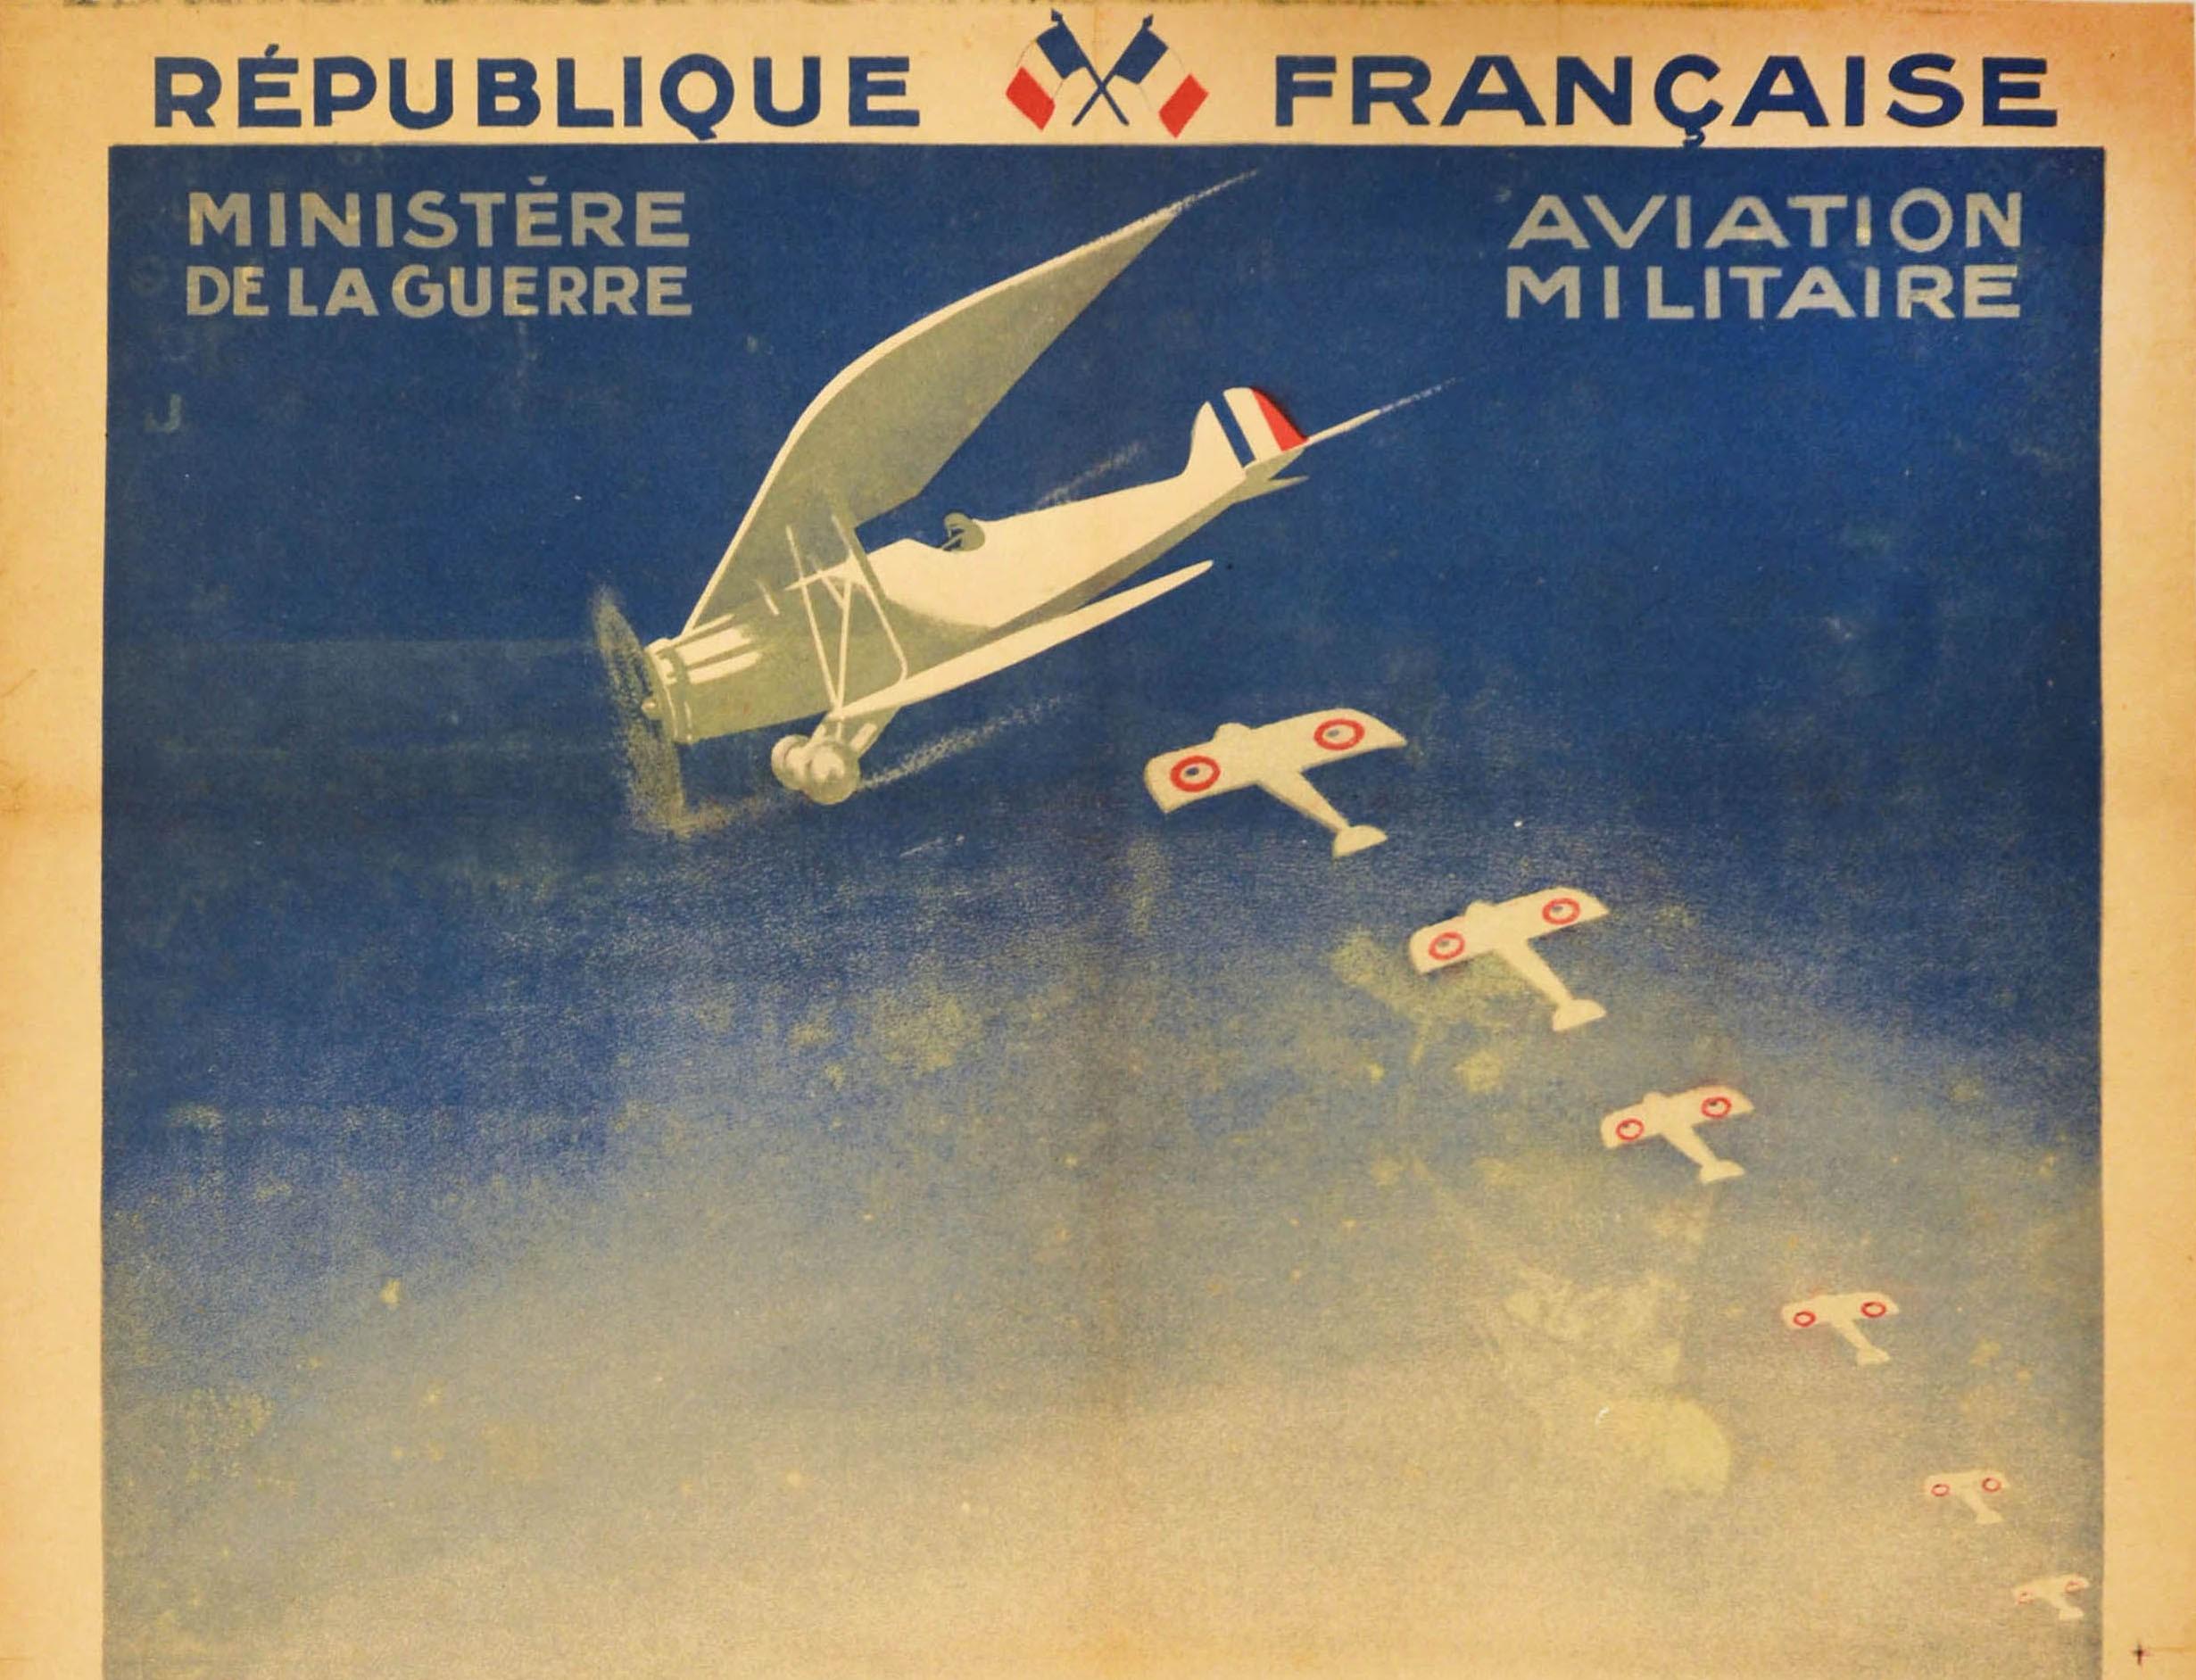 Original Antique Poster Pilotes D'Avions Air Force Pilot Military Recruitment - Print by Paul Colin